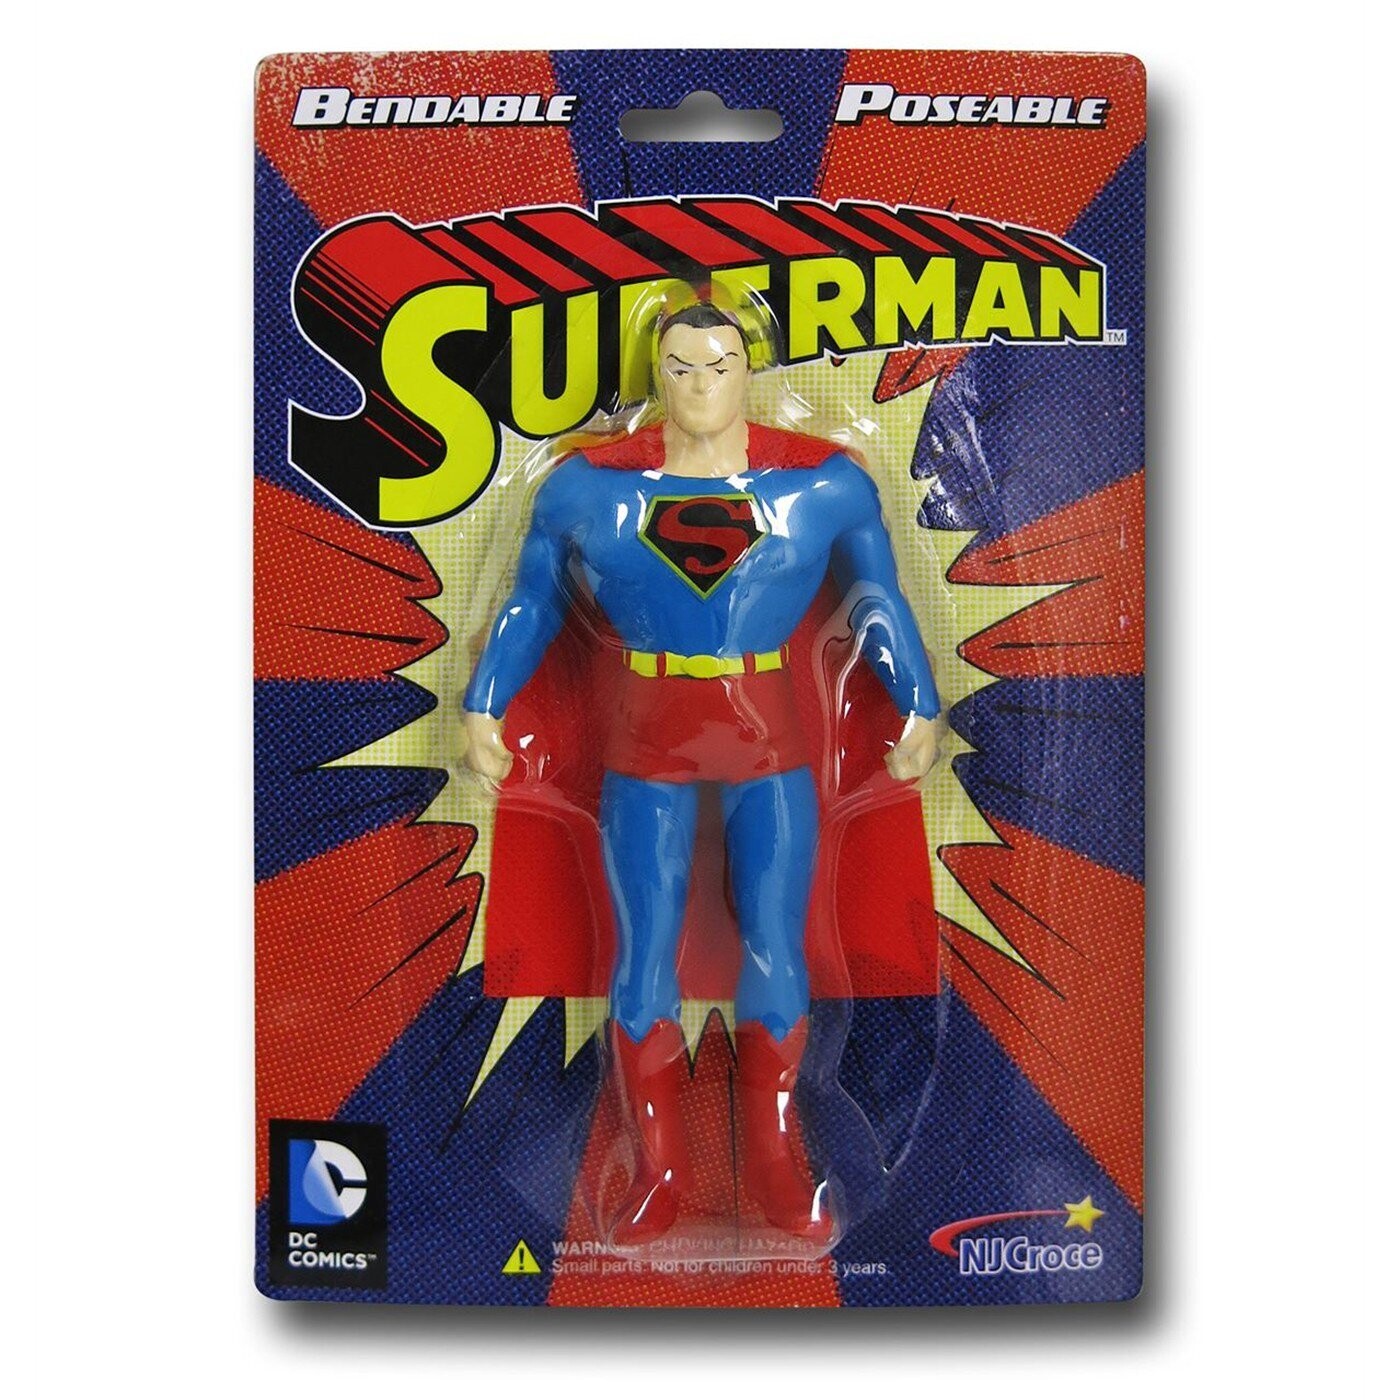 5 1/2"H DC Comics Superman Bendable Figure